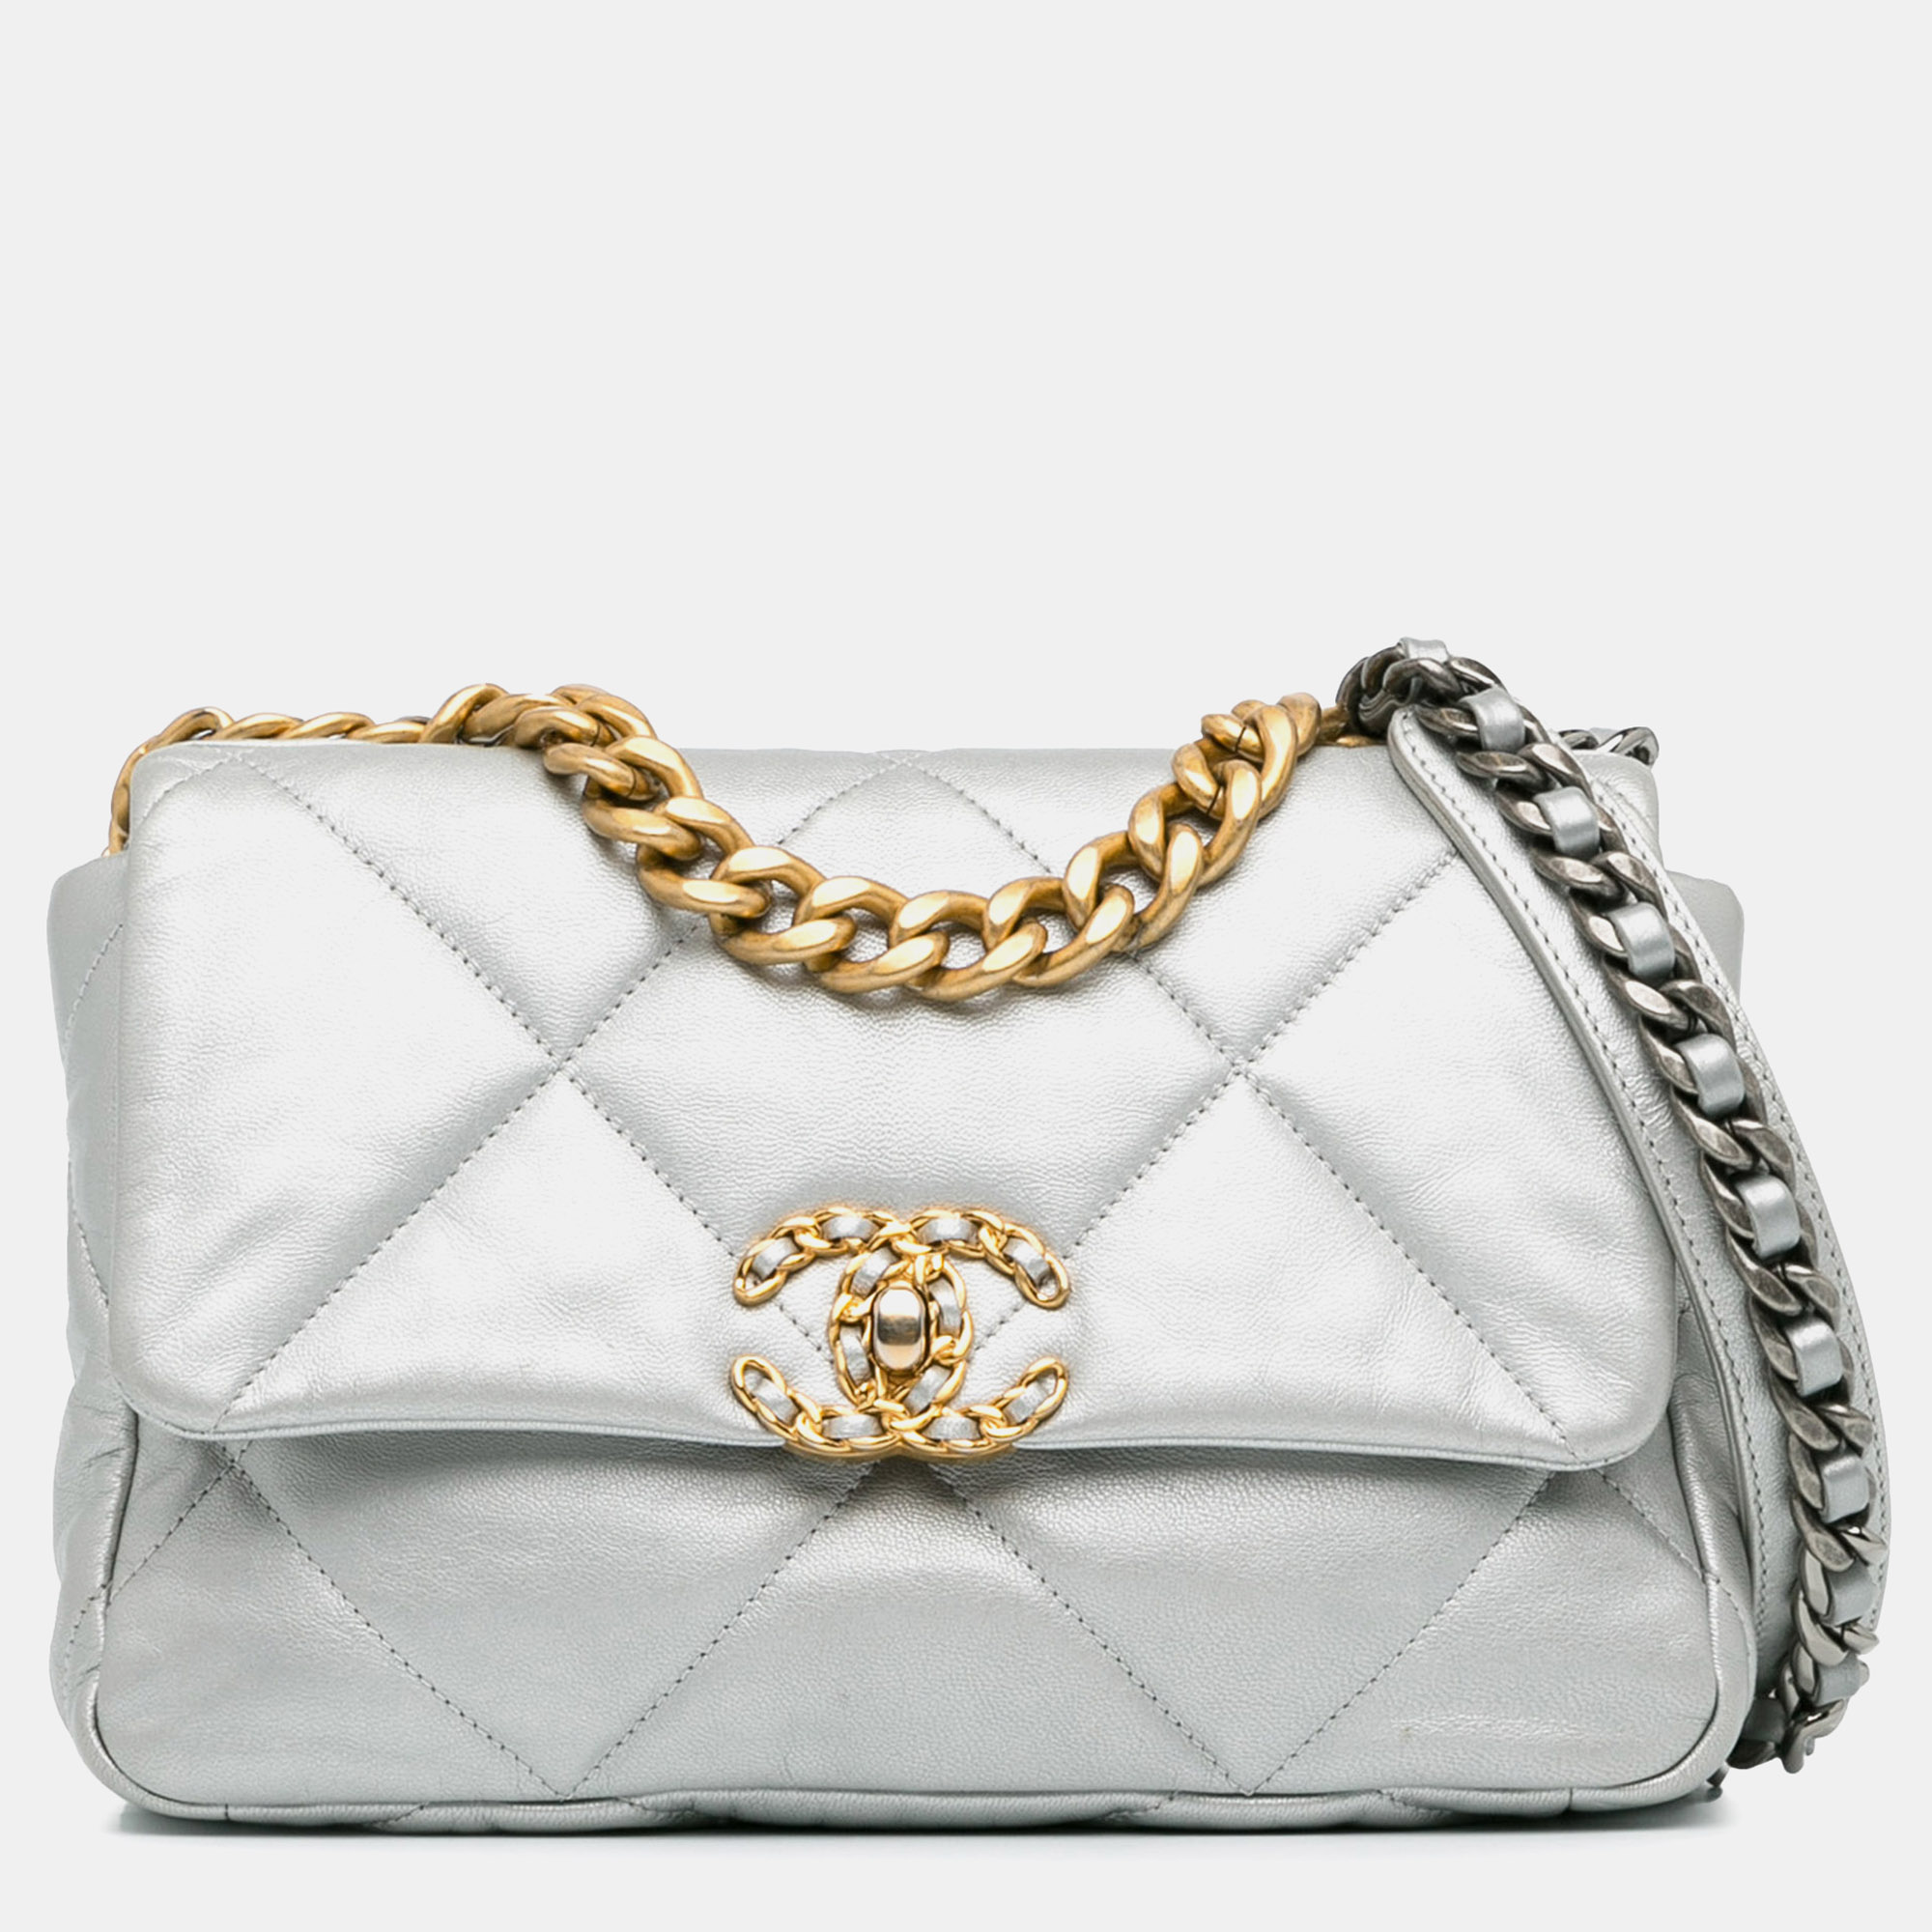 Chanel medium metallic lambskin 19 flap bag